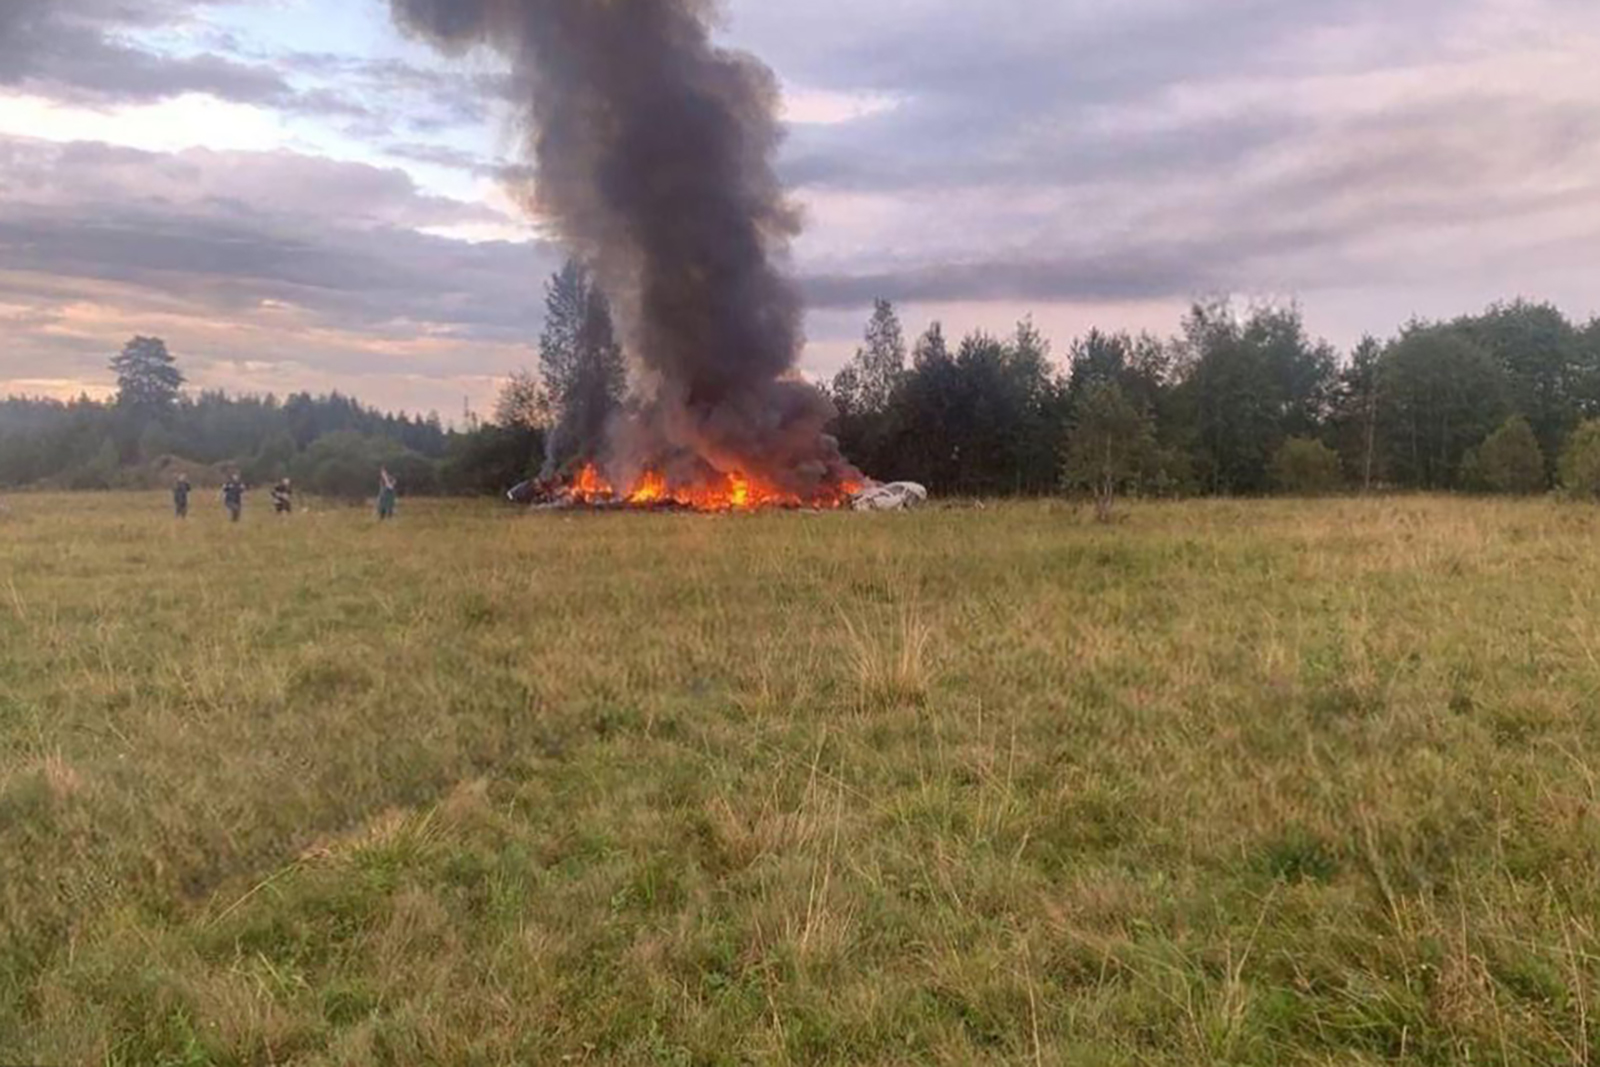 The crash site in Russia's northwestern Tver region on August 23.